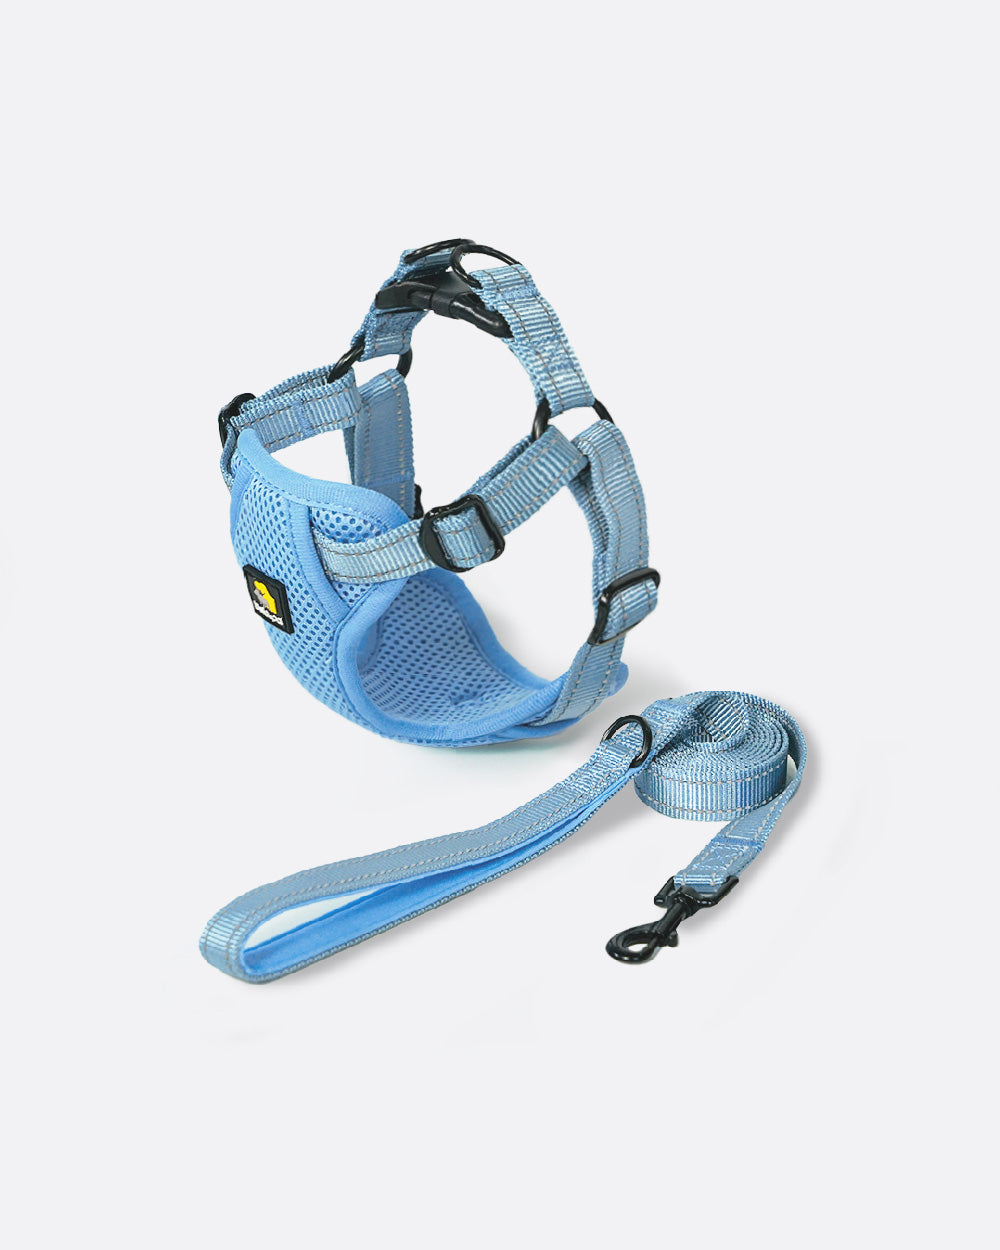 OxyMesh Flexi 踏入式狗胸背帶連牽繩套裝 - 天空藍